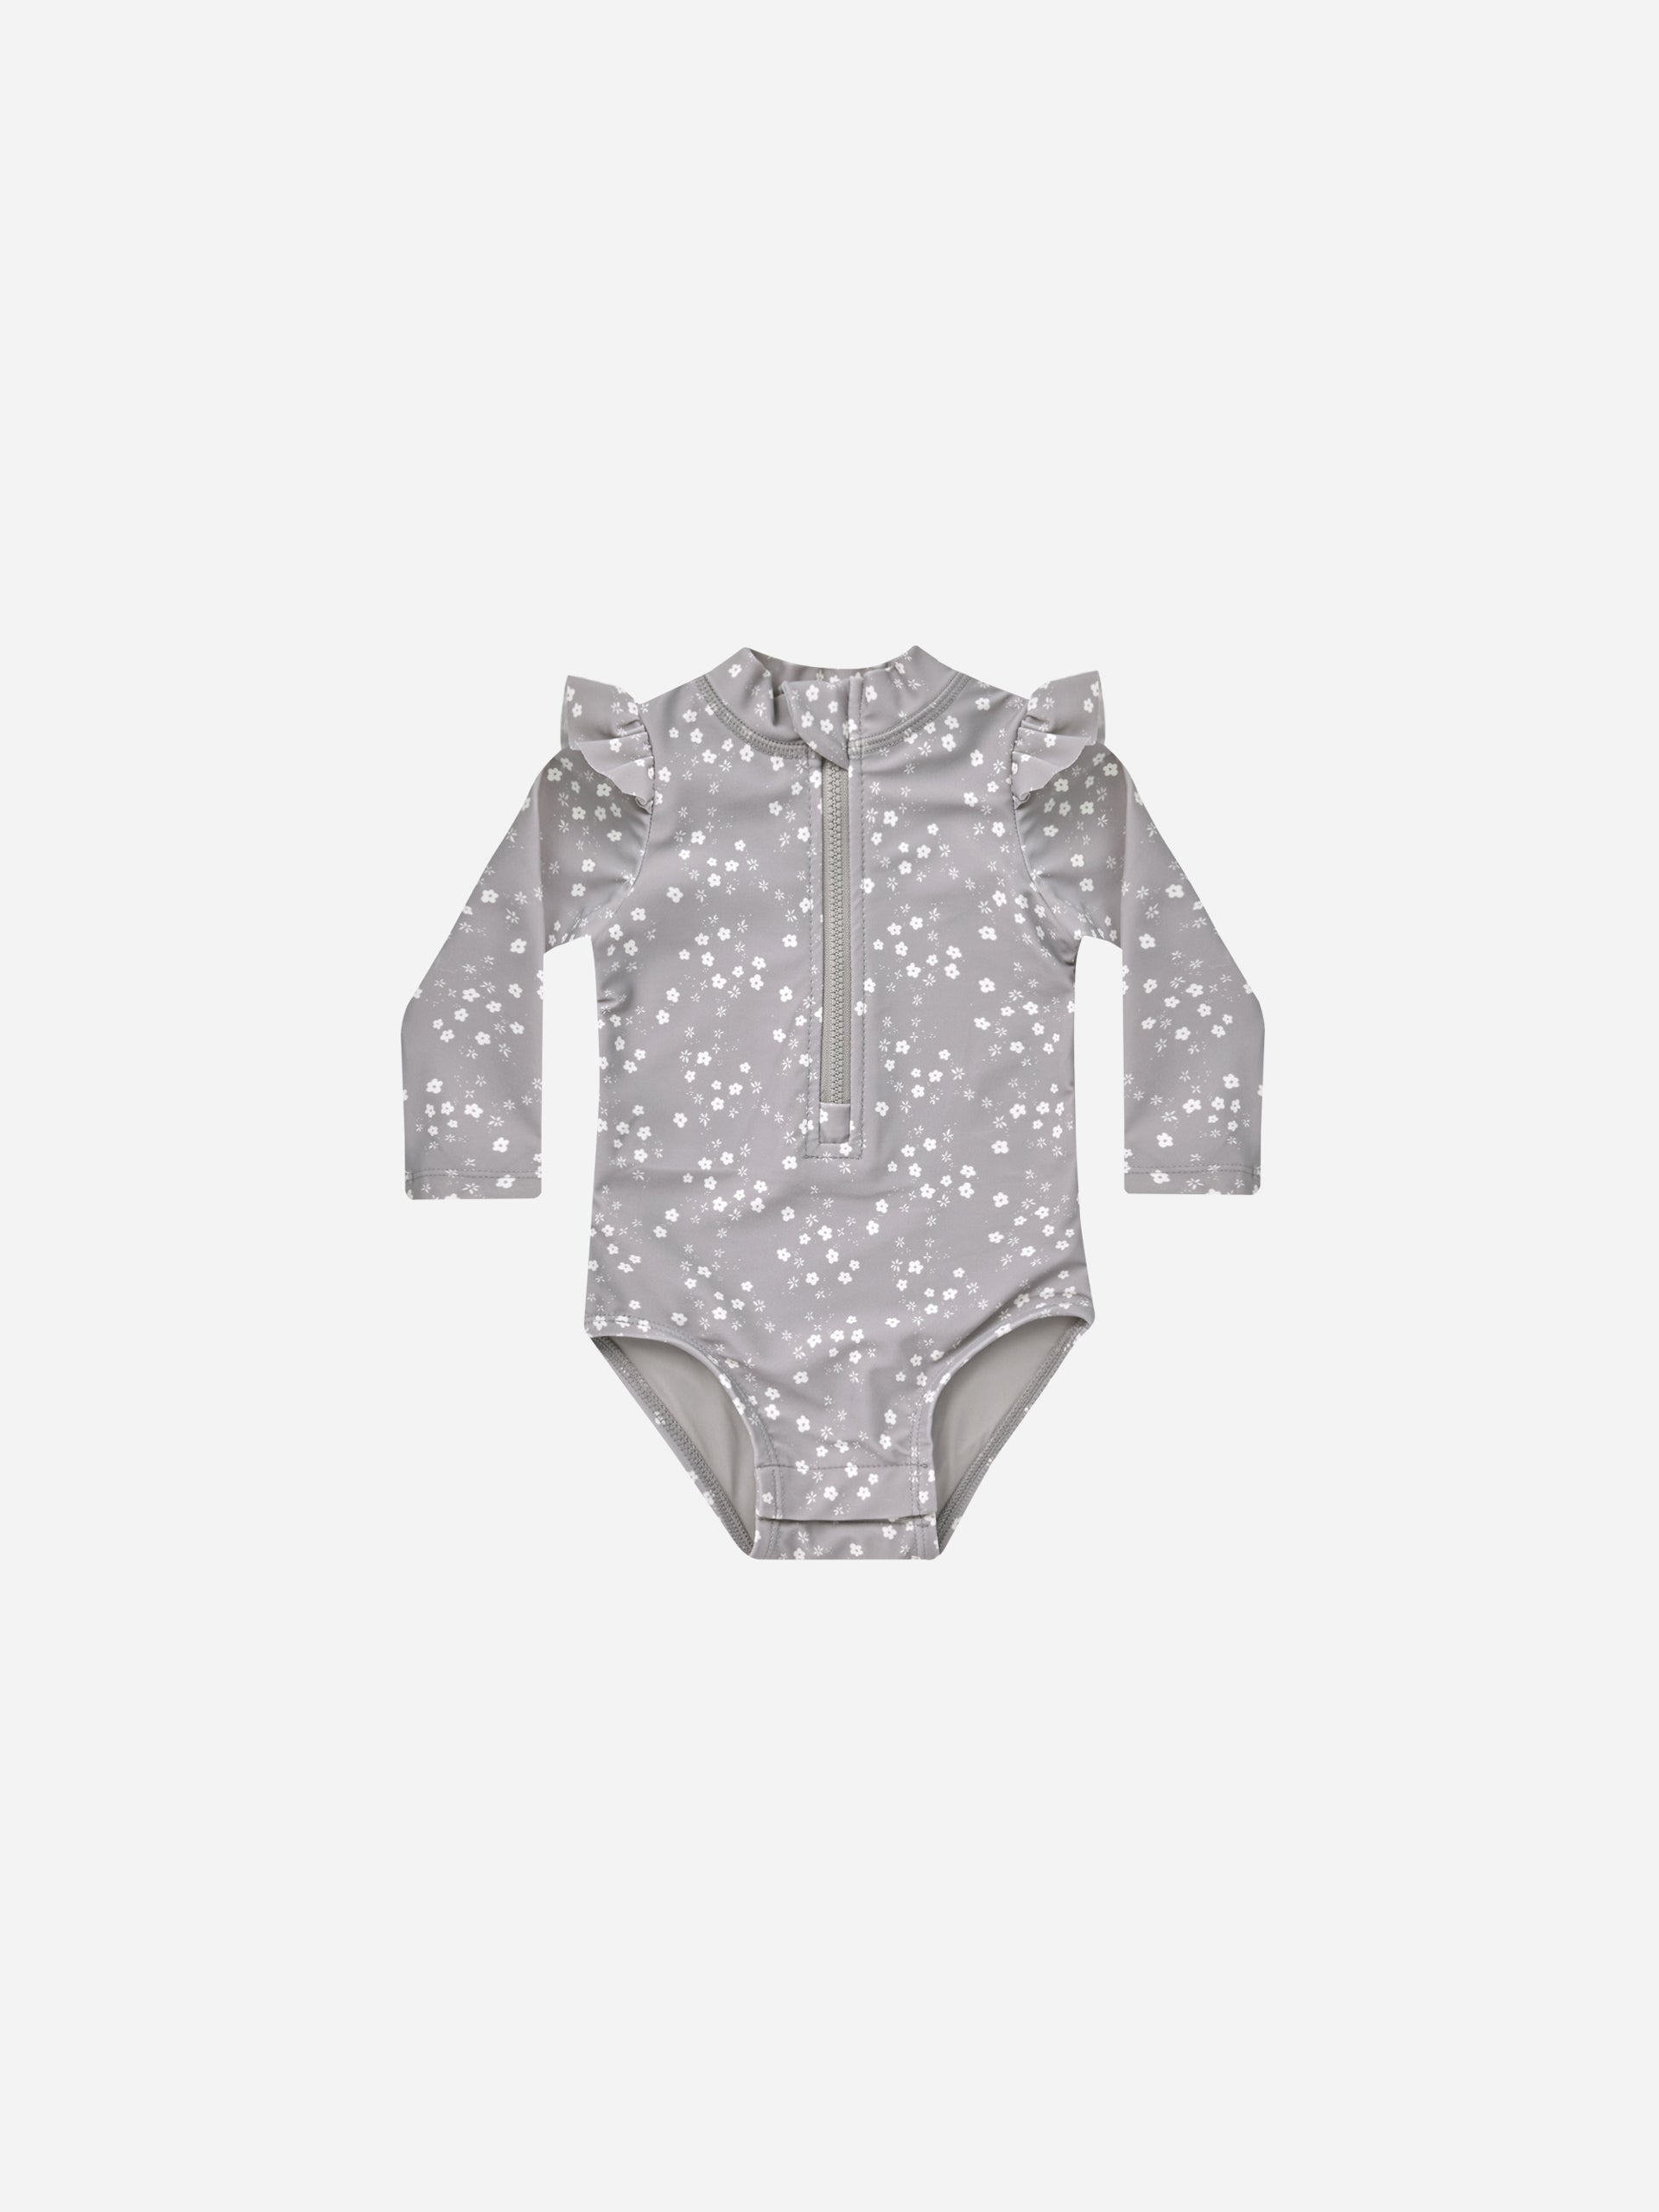 Byron Rashguard One-Piece || Fleur - Rylee + Cru | Kids Clothes | Trendy Baby Clothes | Modern Infant Outfits |